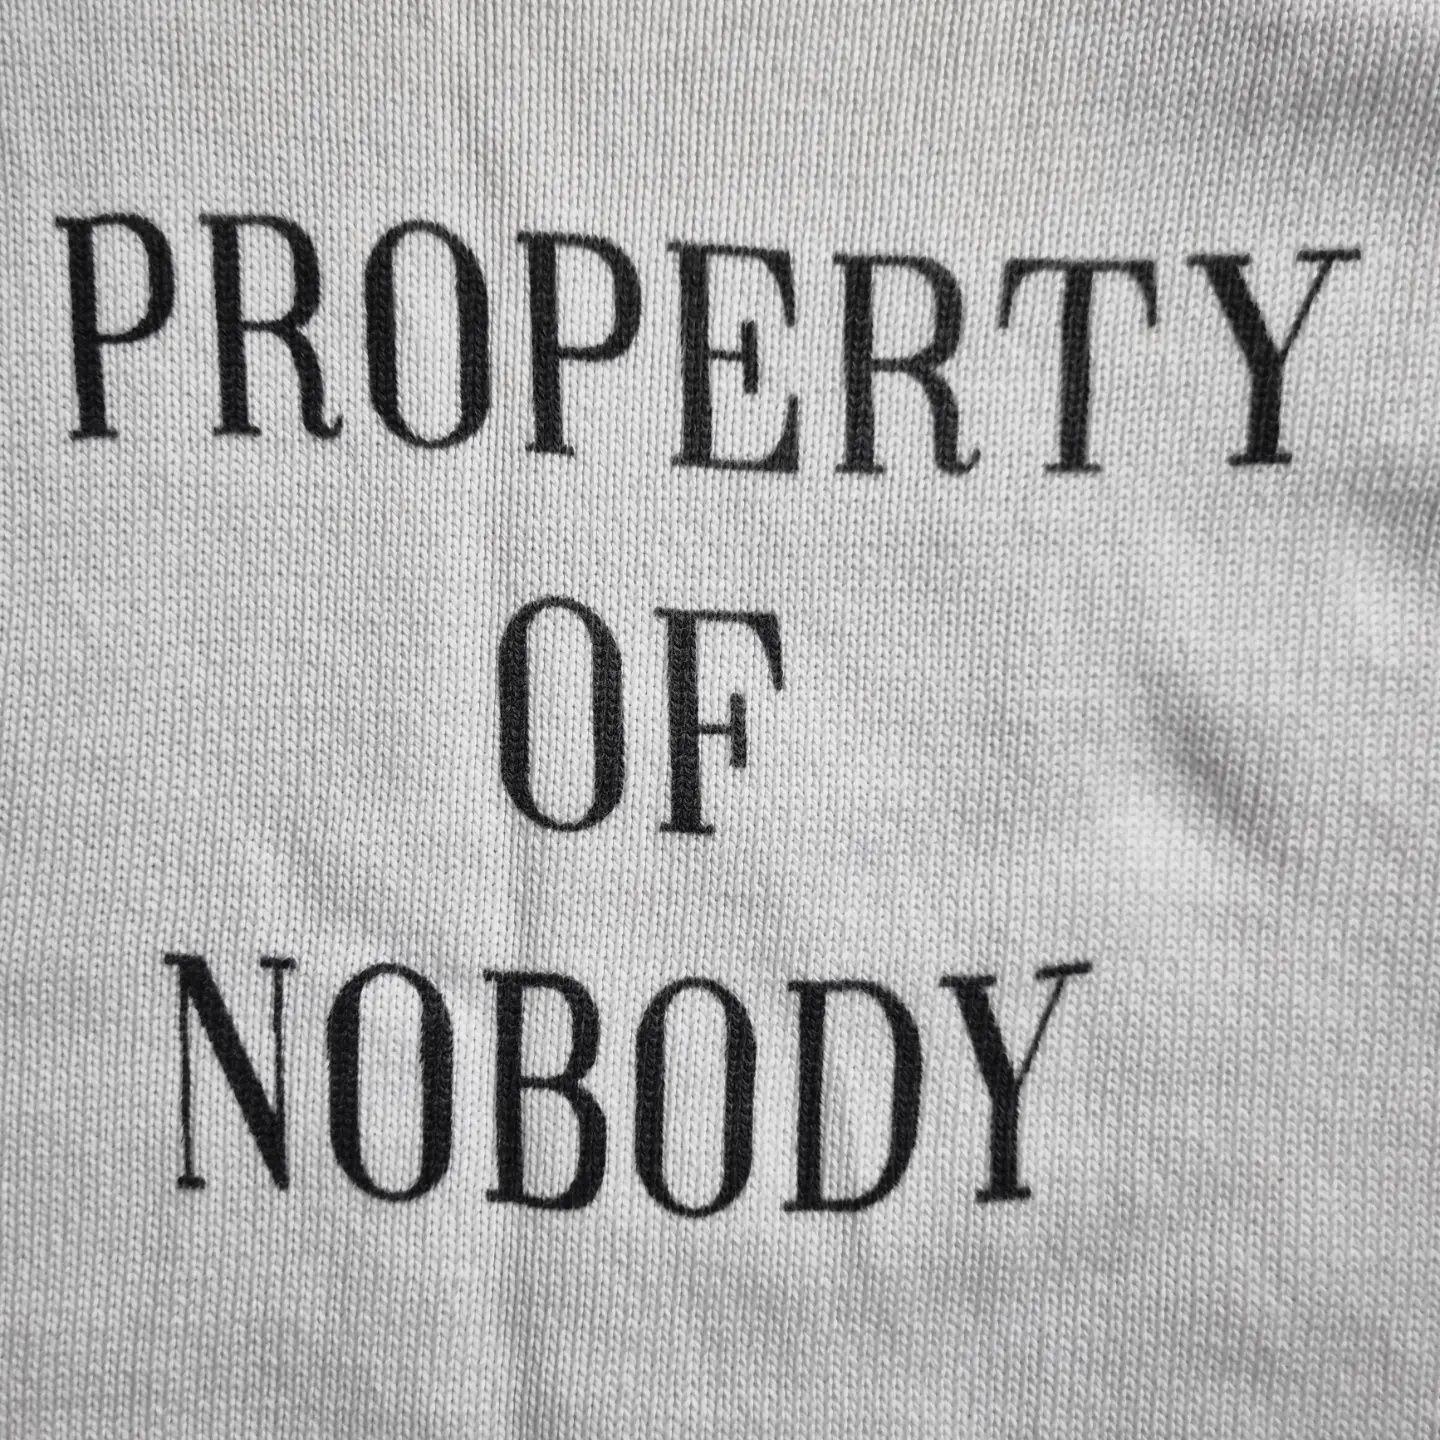 Sweater Property of Nobody